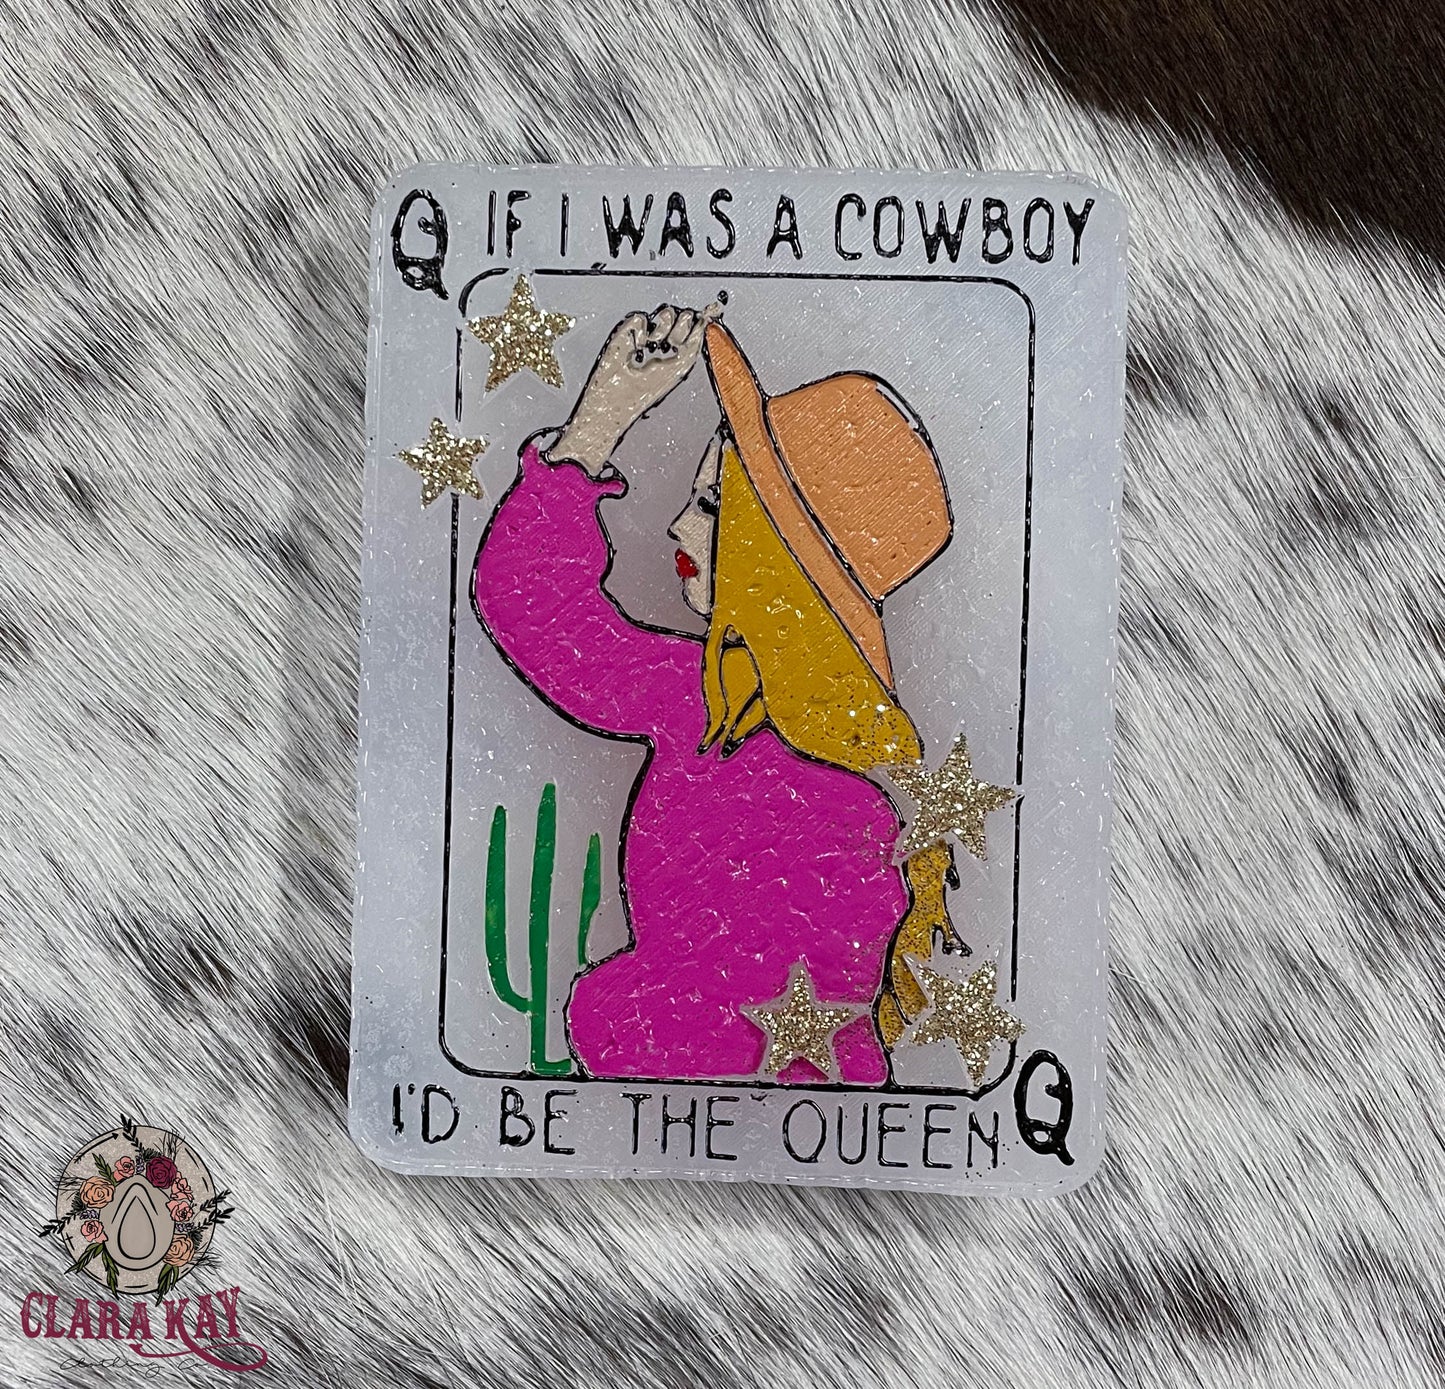 Cowboy/Queen